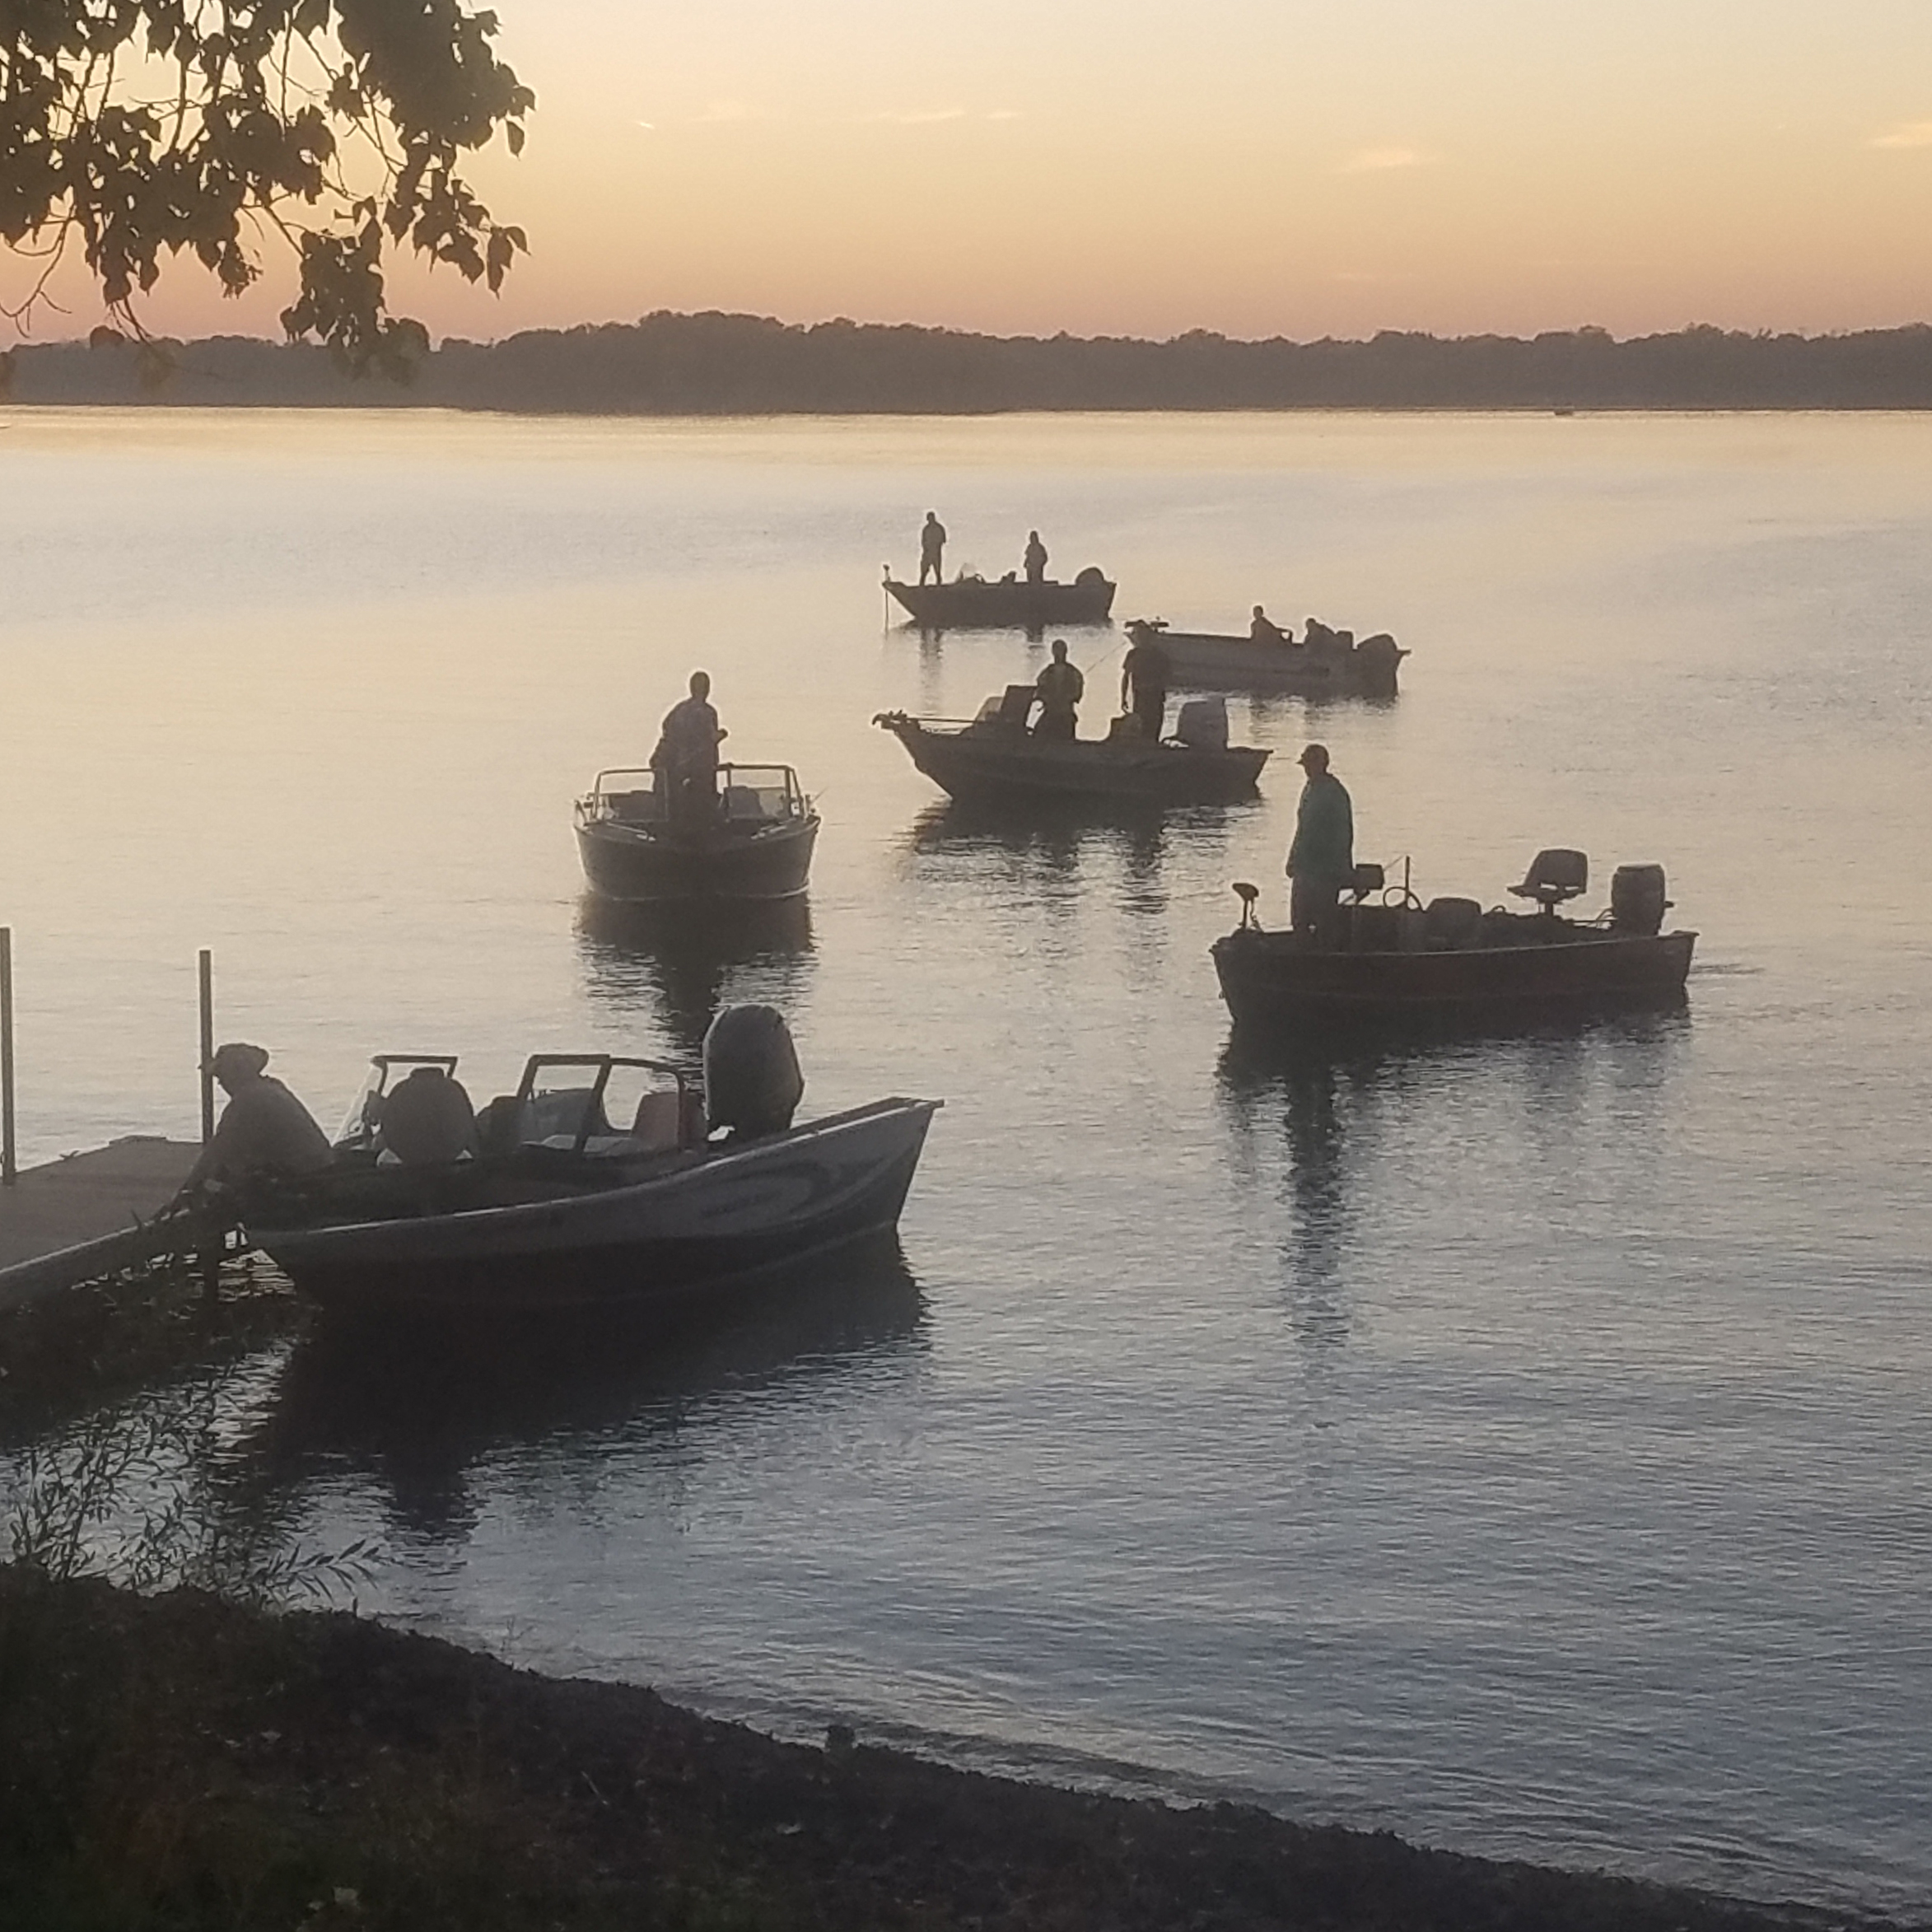 Teams fishing on Lake Ida